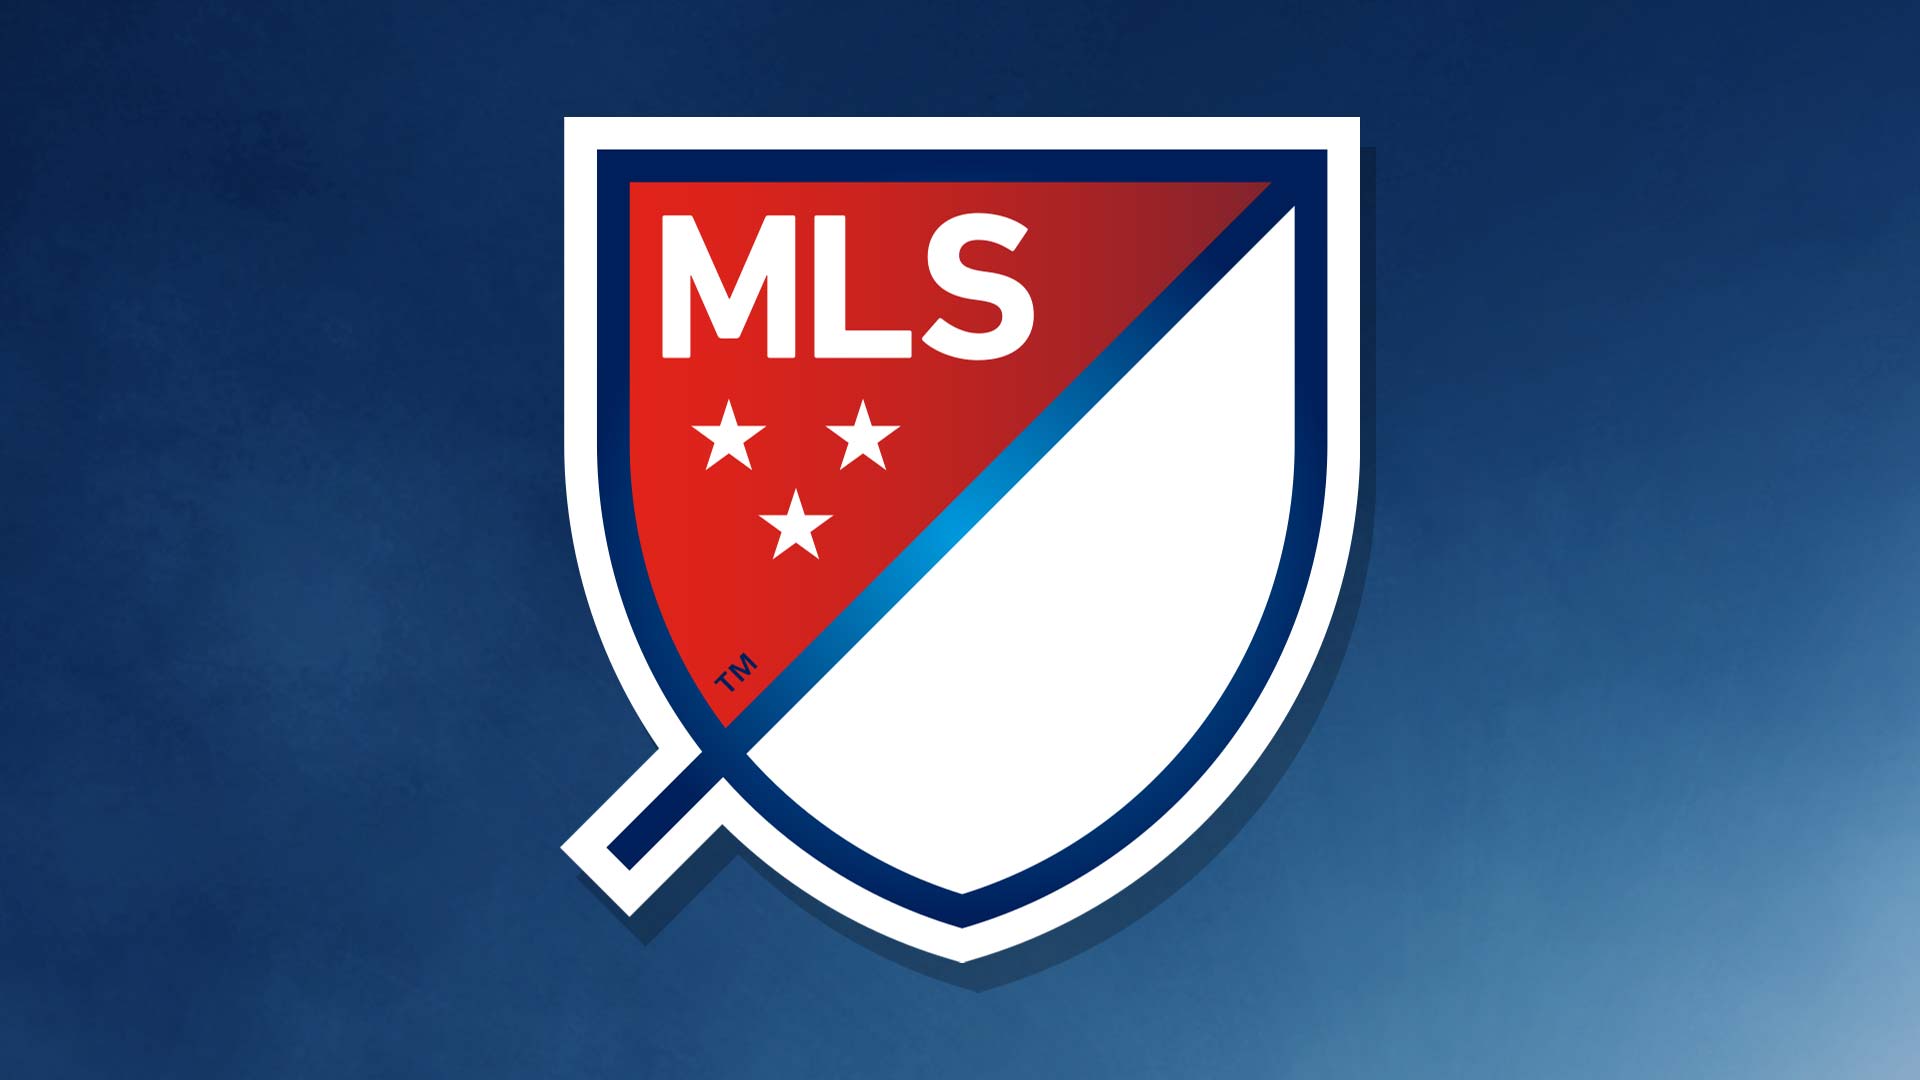 Major League Soccer emblem